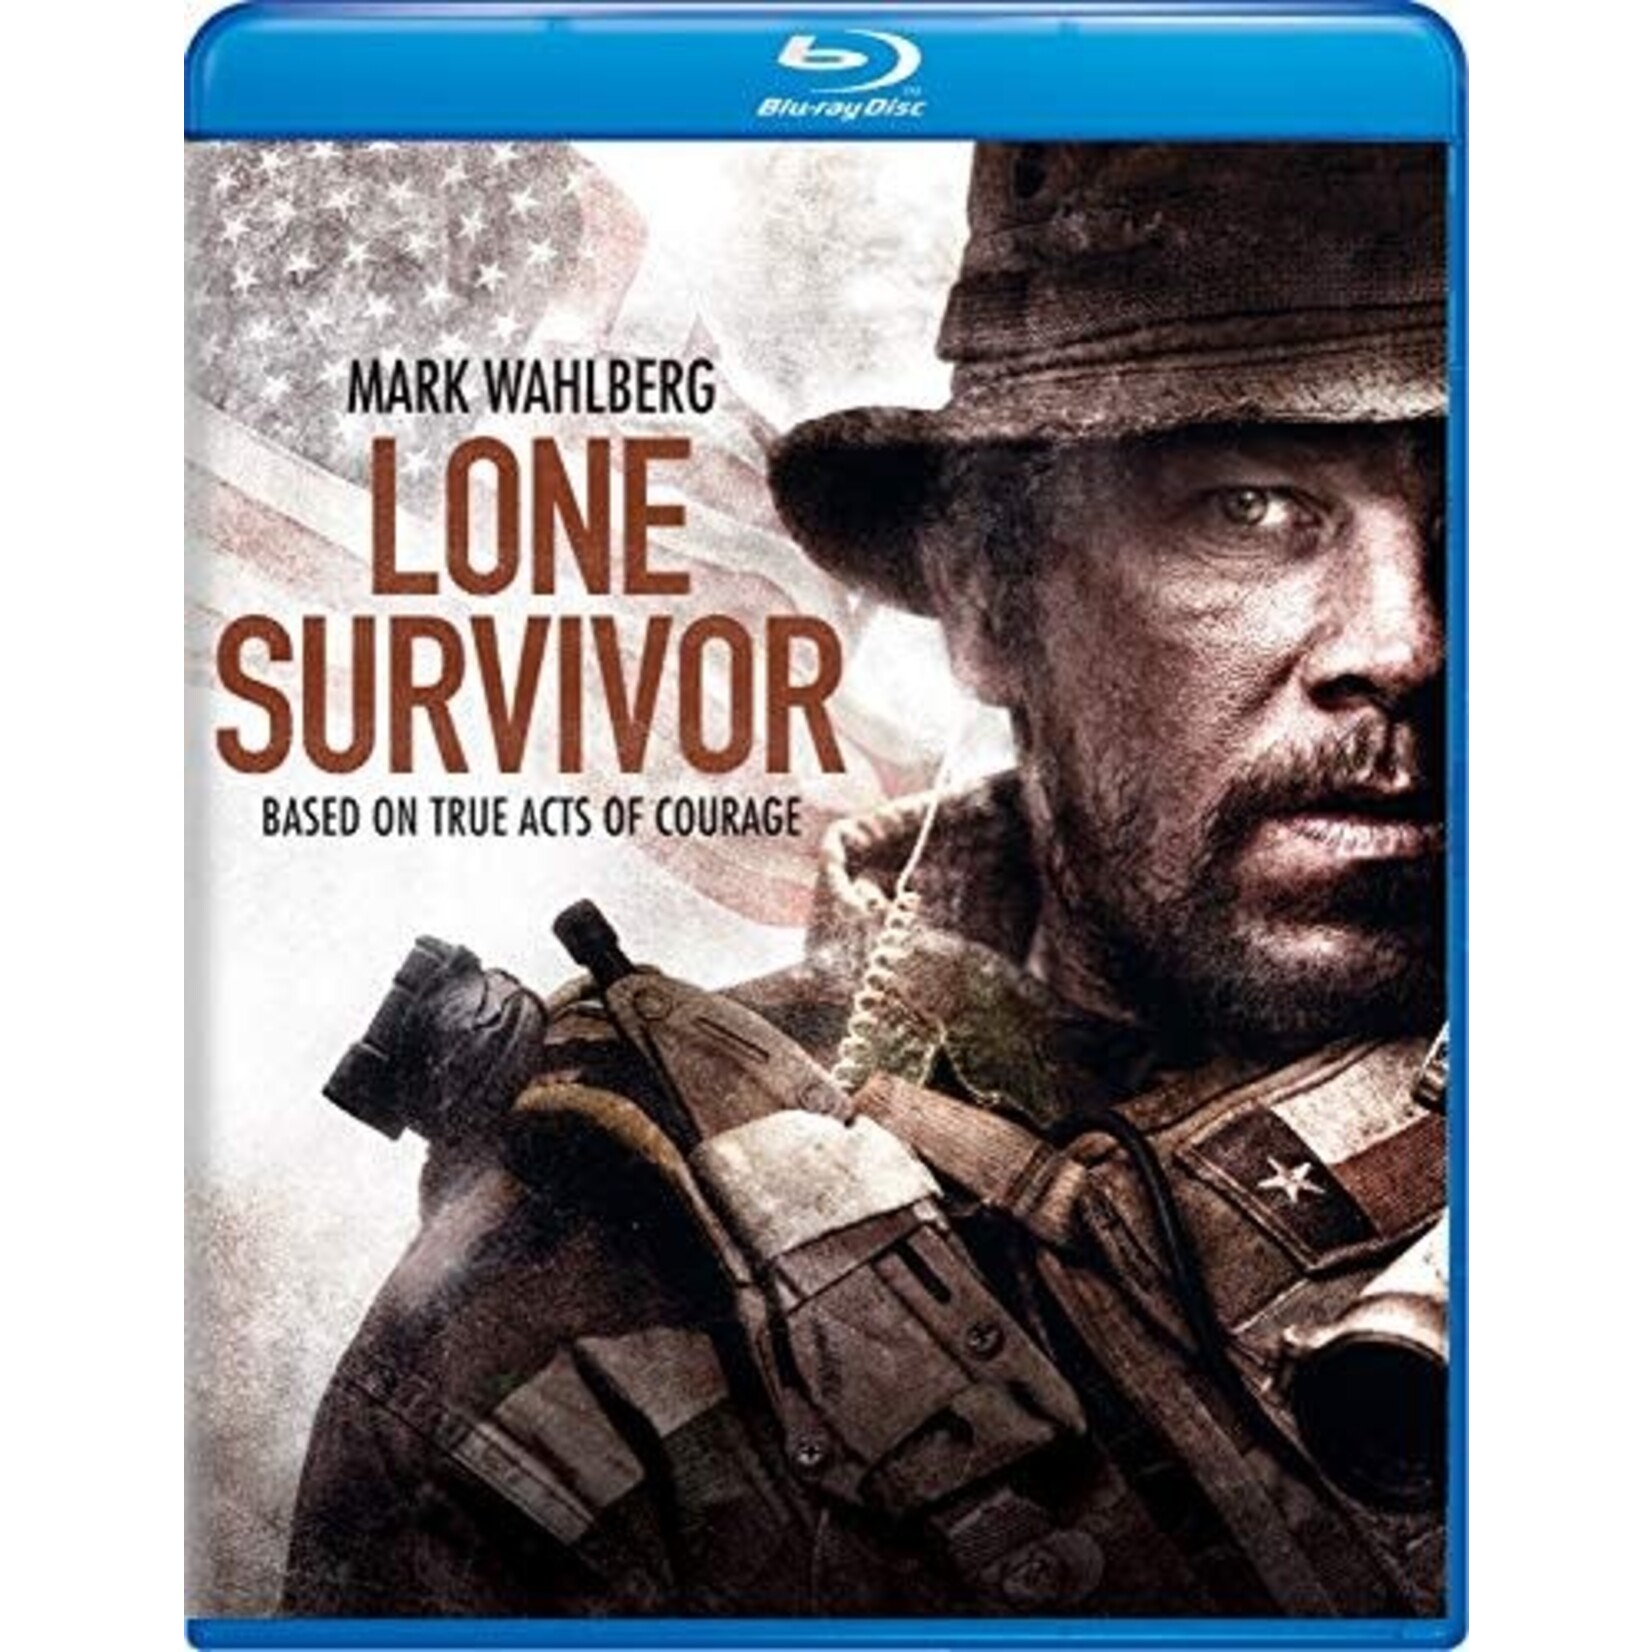 Lone Survivor (2013) [USED BRD]